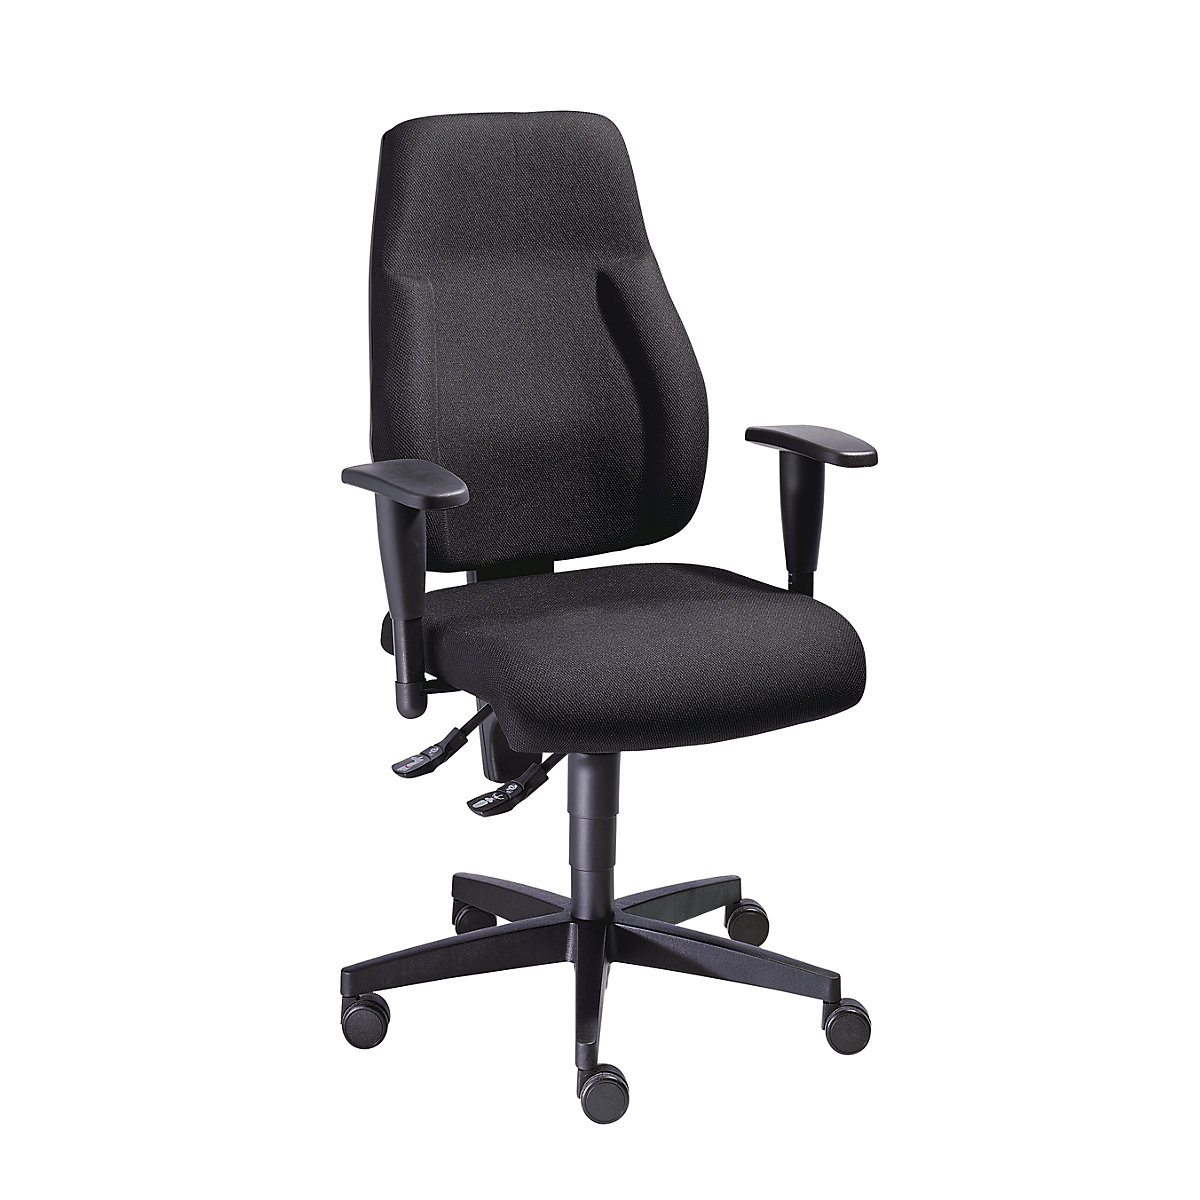 Udobna okretna stolica LADY SITNESS – Topstar, mehanika za stalni kontakt, visina naslona za leđa 580 mm, u crnoj boji-2